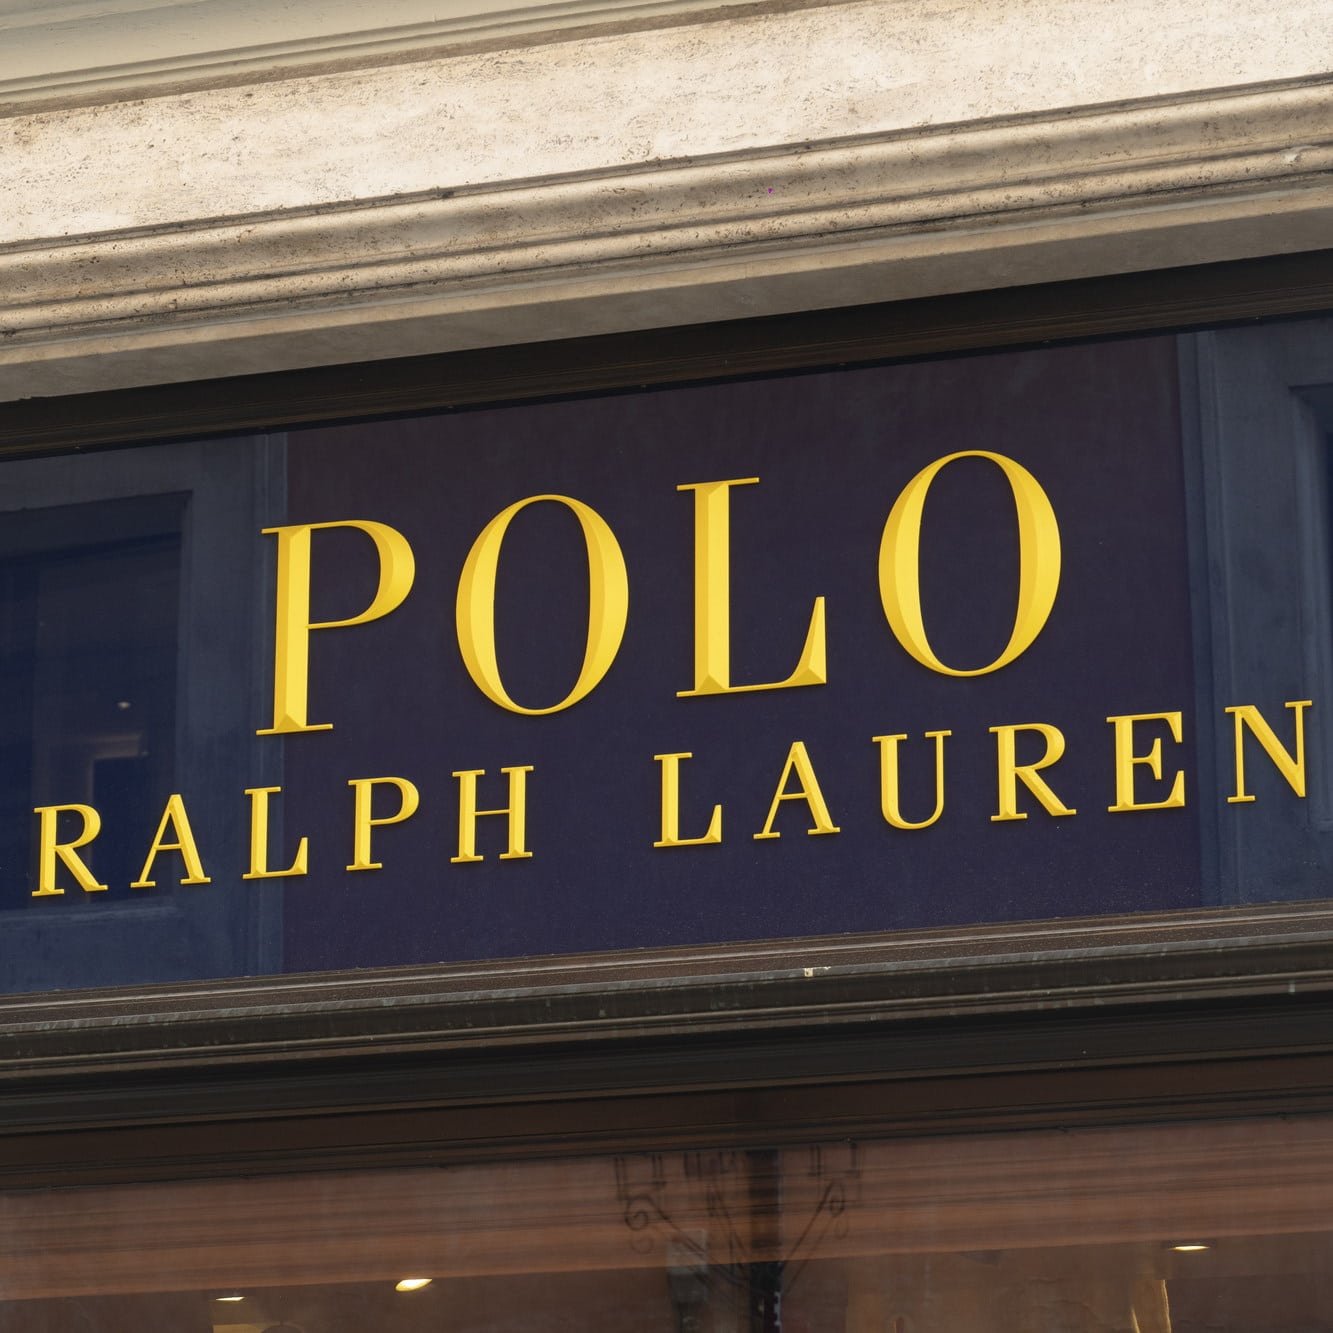 Polo Ralph Lauren - Adventures in Brand Architecture